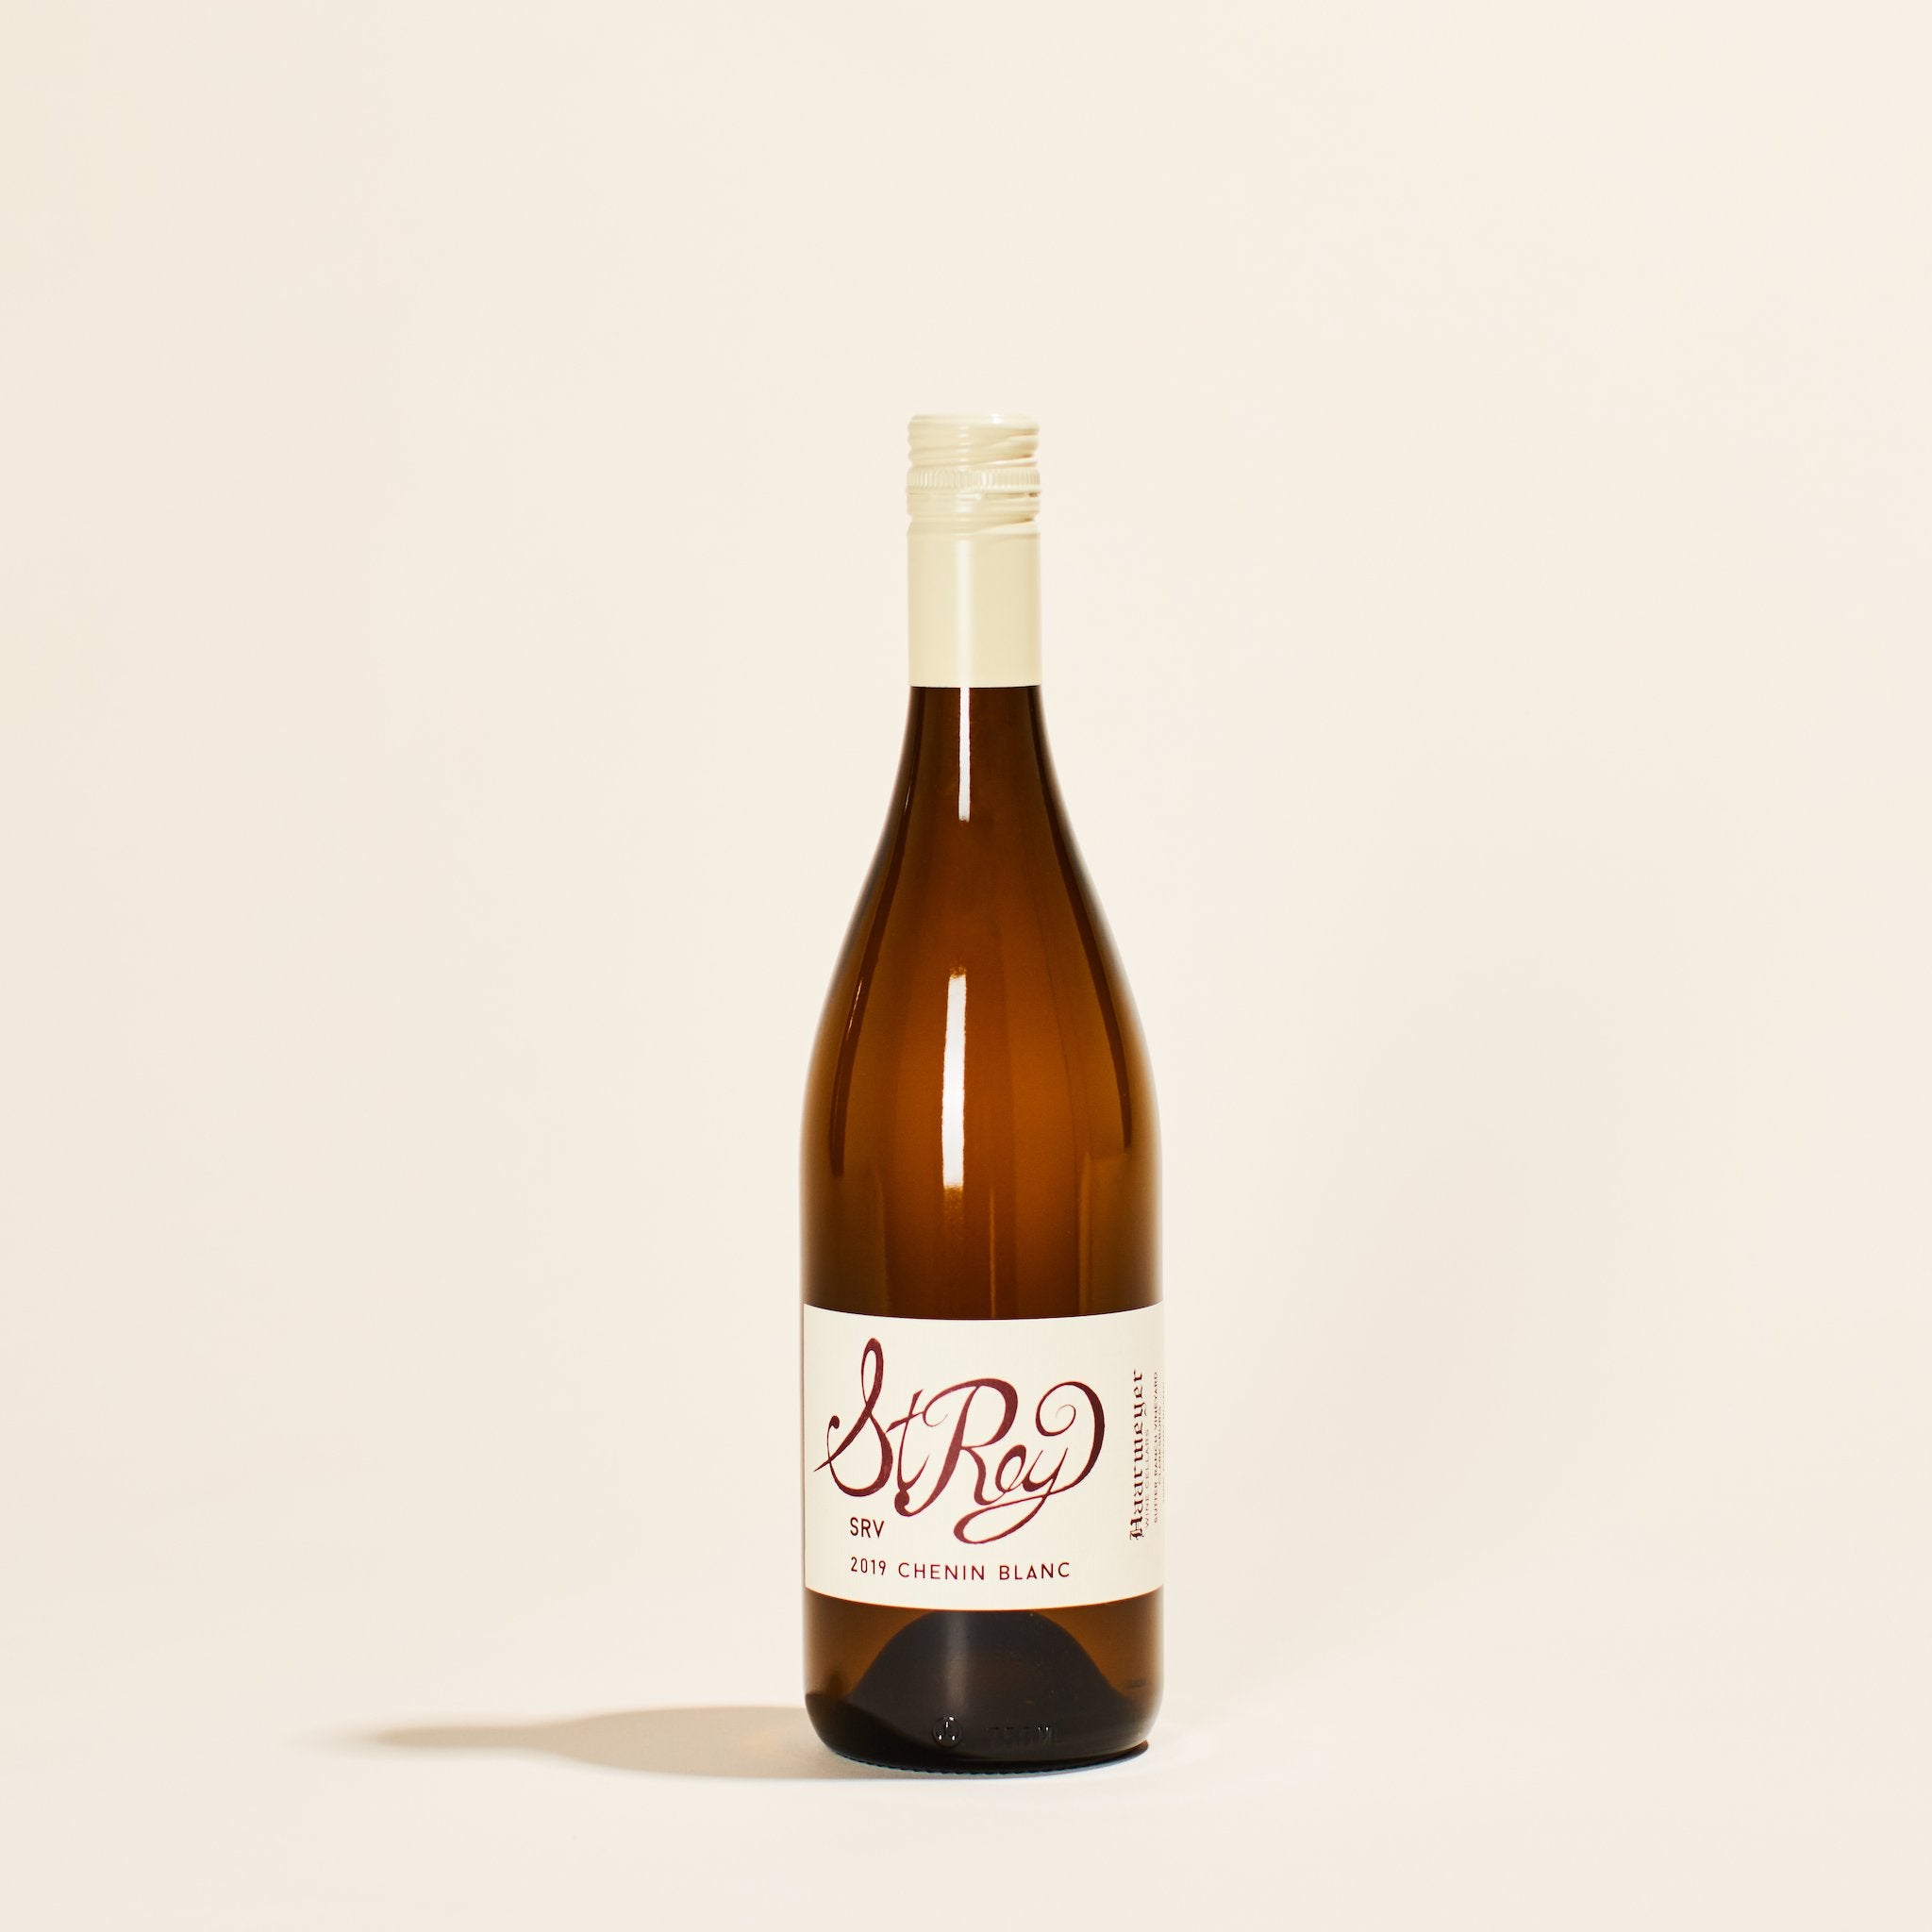 st rey srv haarmeyer califronia usa natural white wine bottle